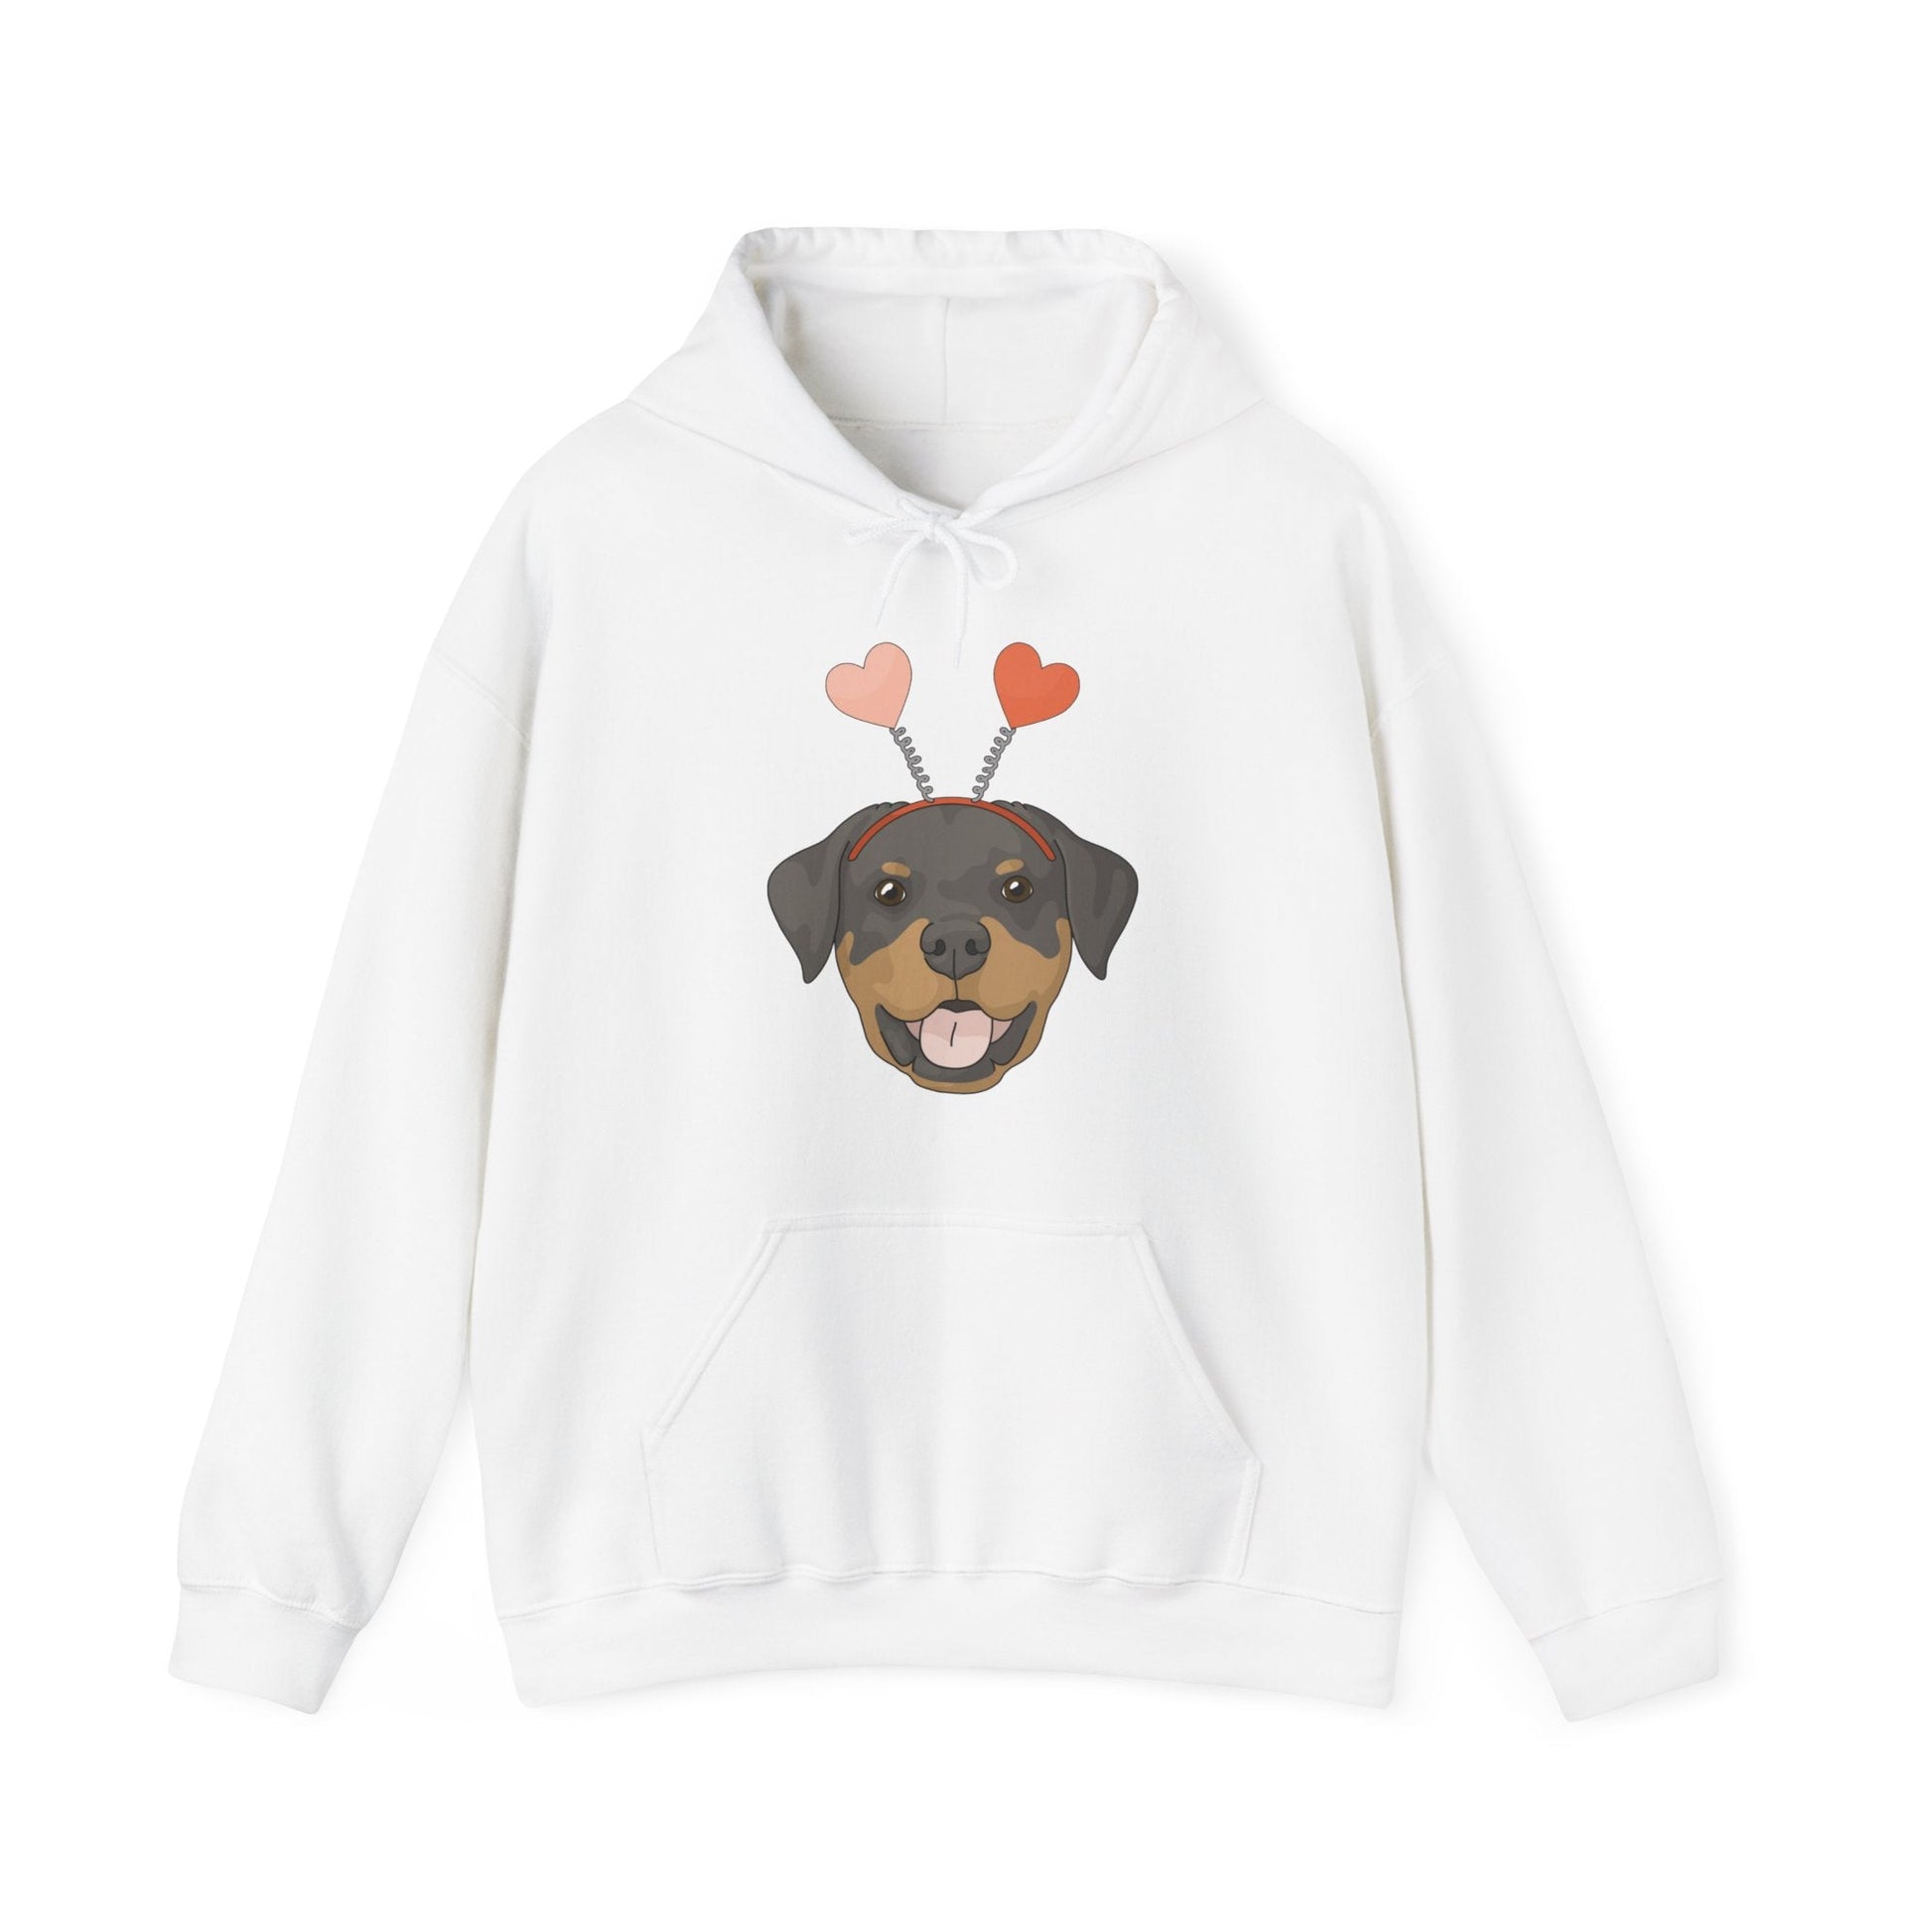 A Very Rottie Valentine | Hooded Sweatshirt - Detezi Designs-12882998318058464541